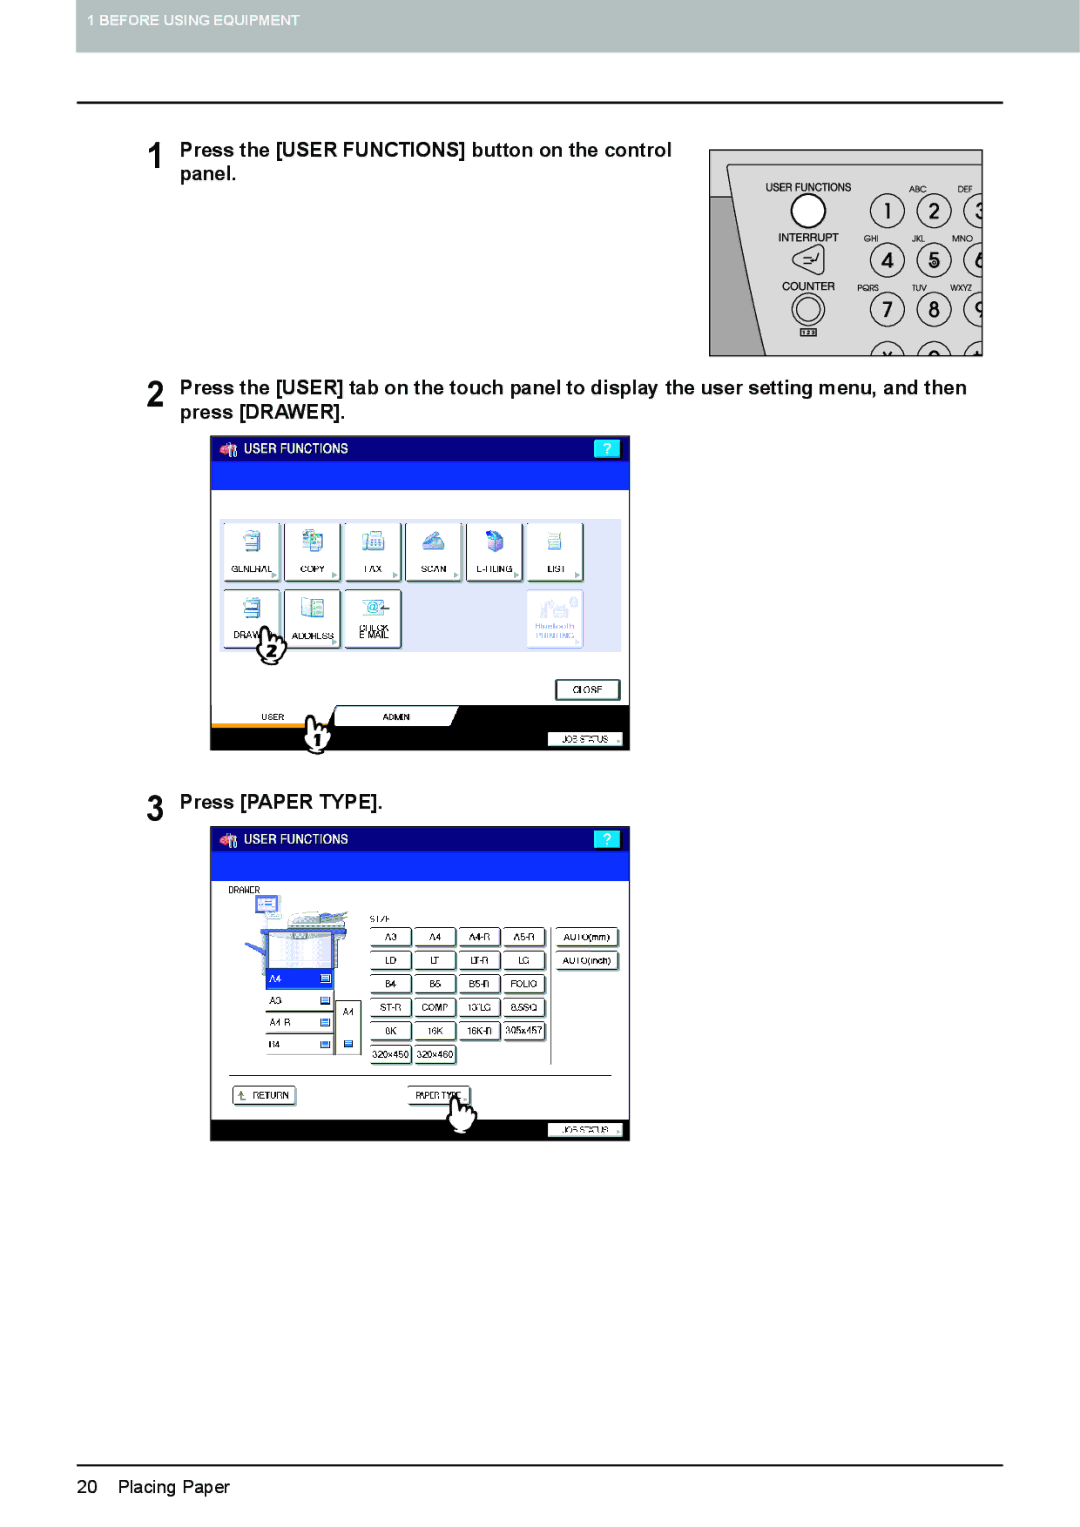 Toshiba 6520c, e-STUDIO5520C manual Placing Paper 